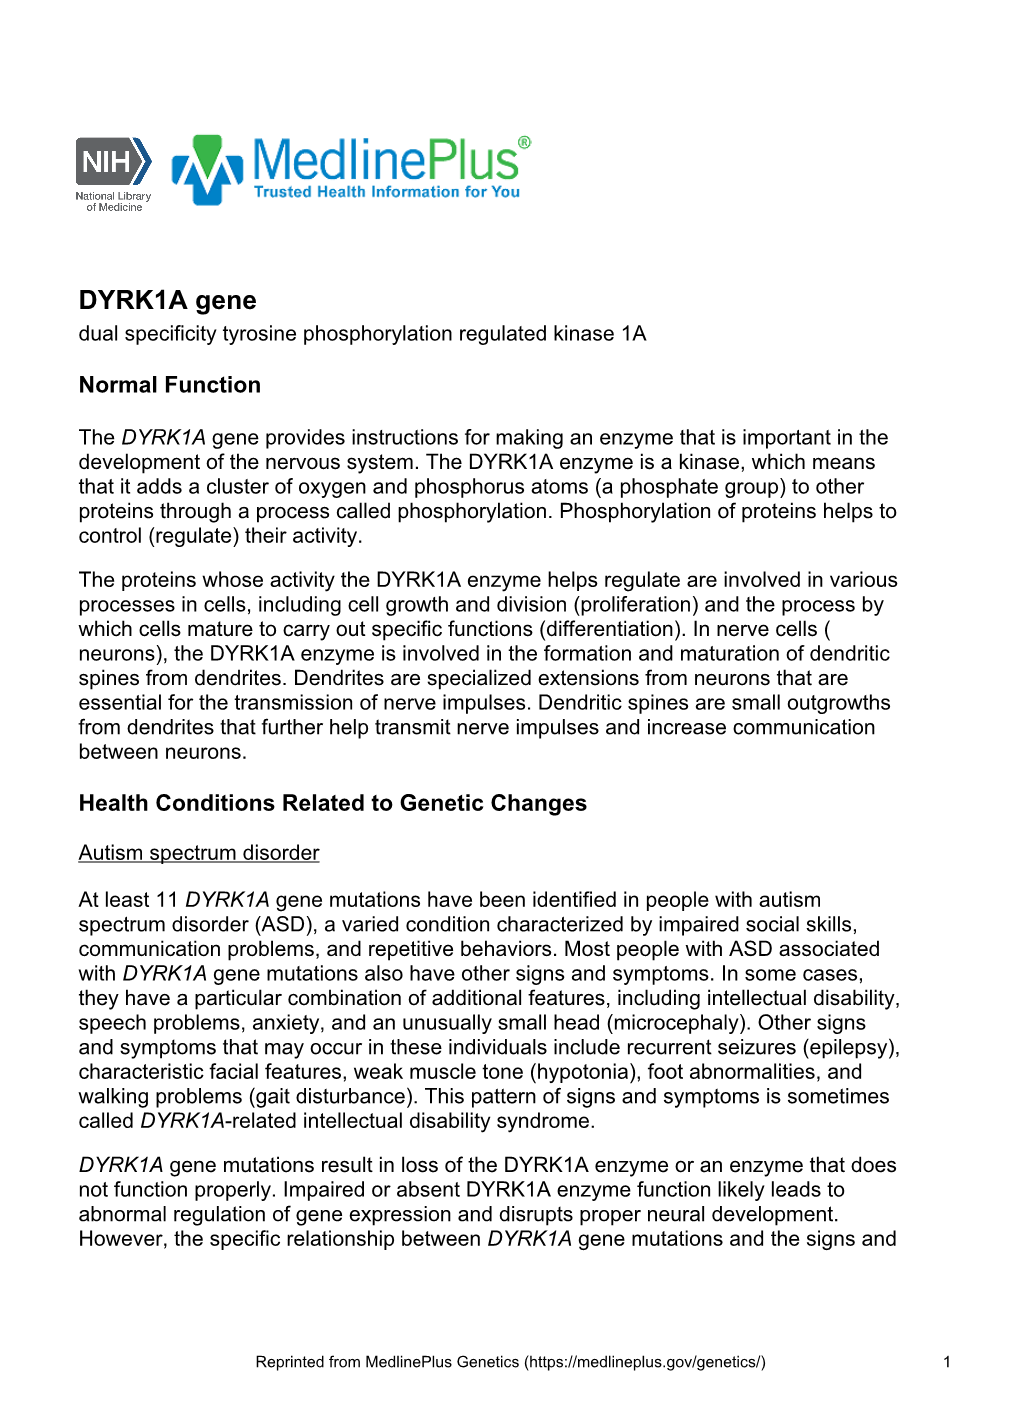 DYRK1A Gene Dual Specificity Tyrosine Phosphorylation Regulated Kinase 1A